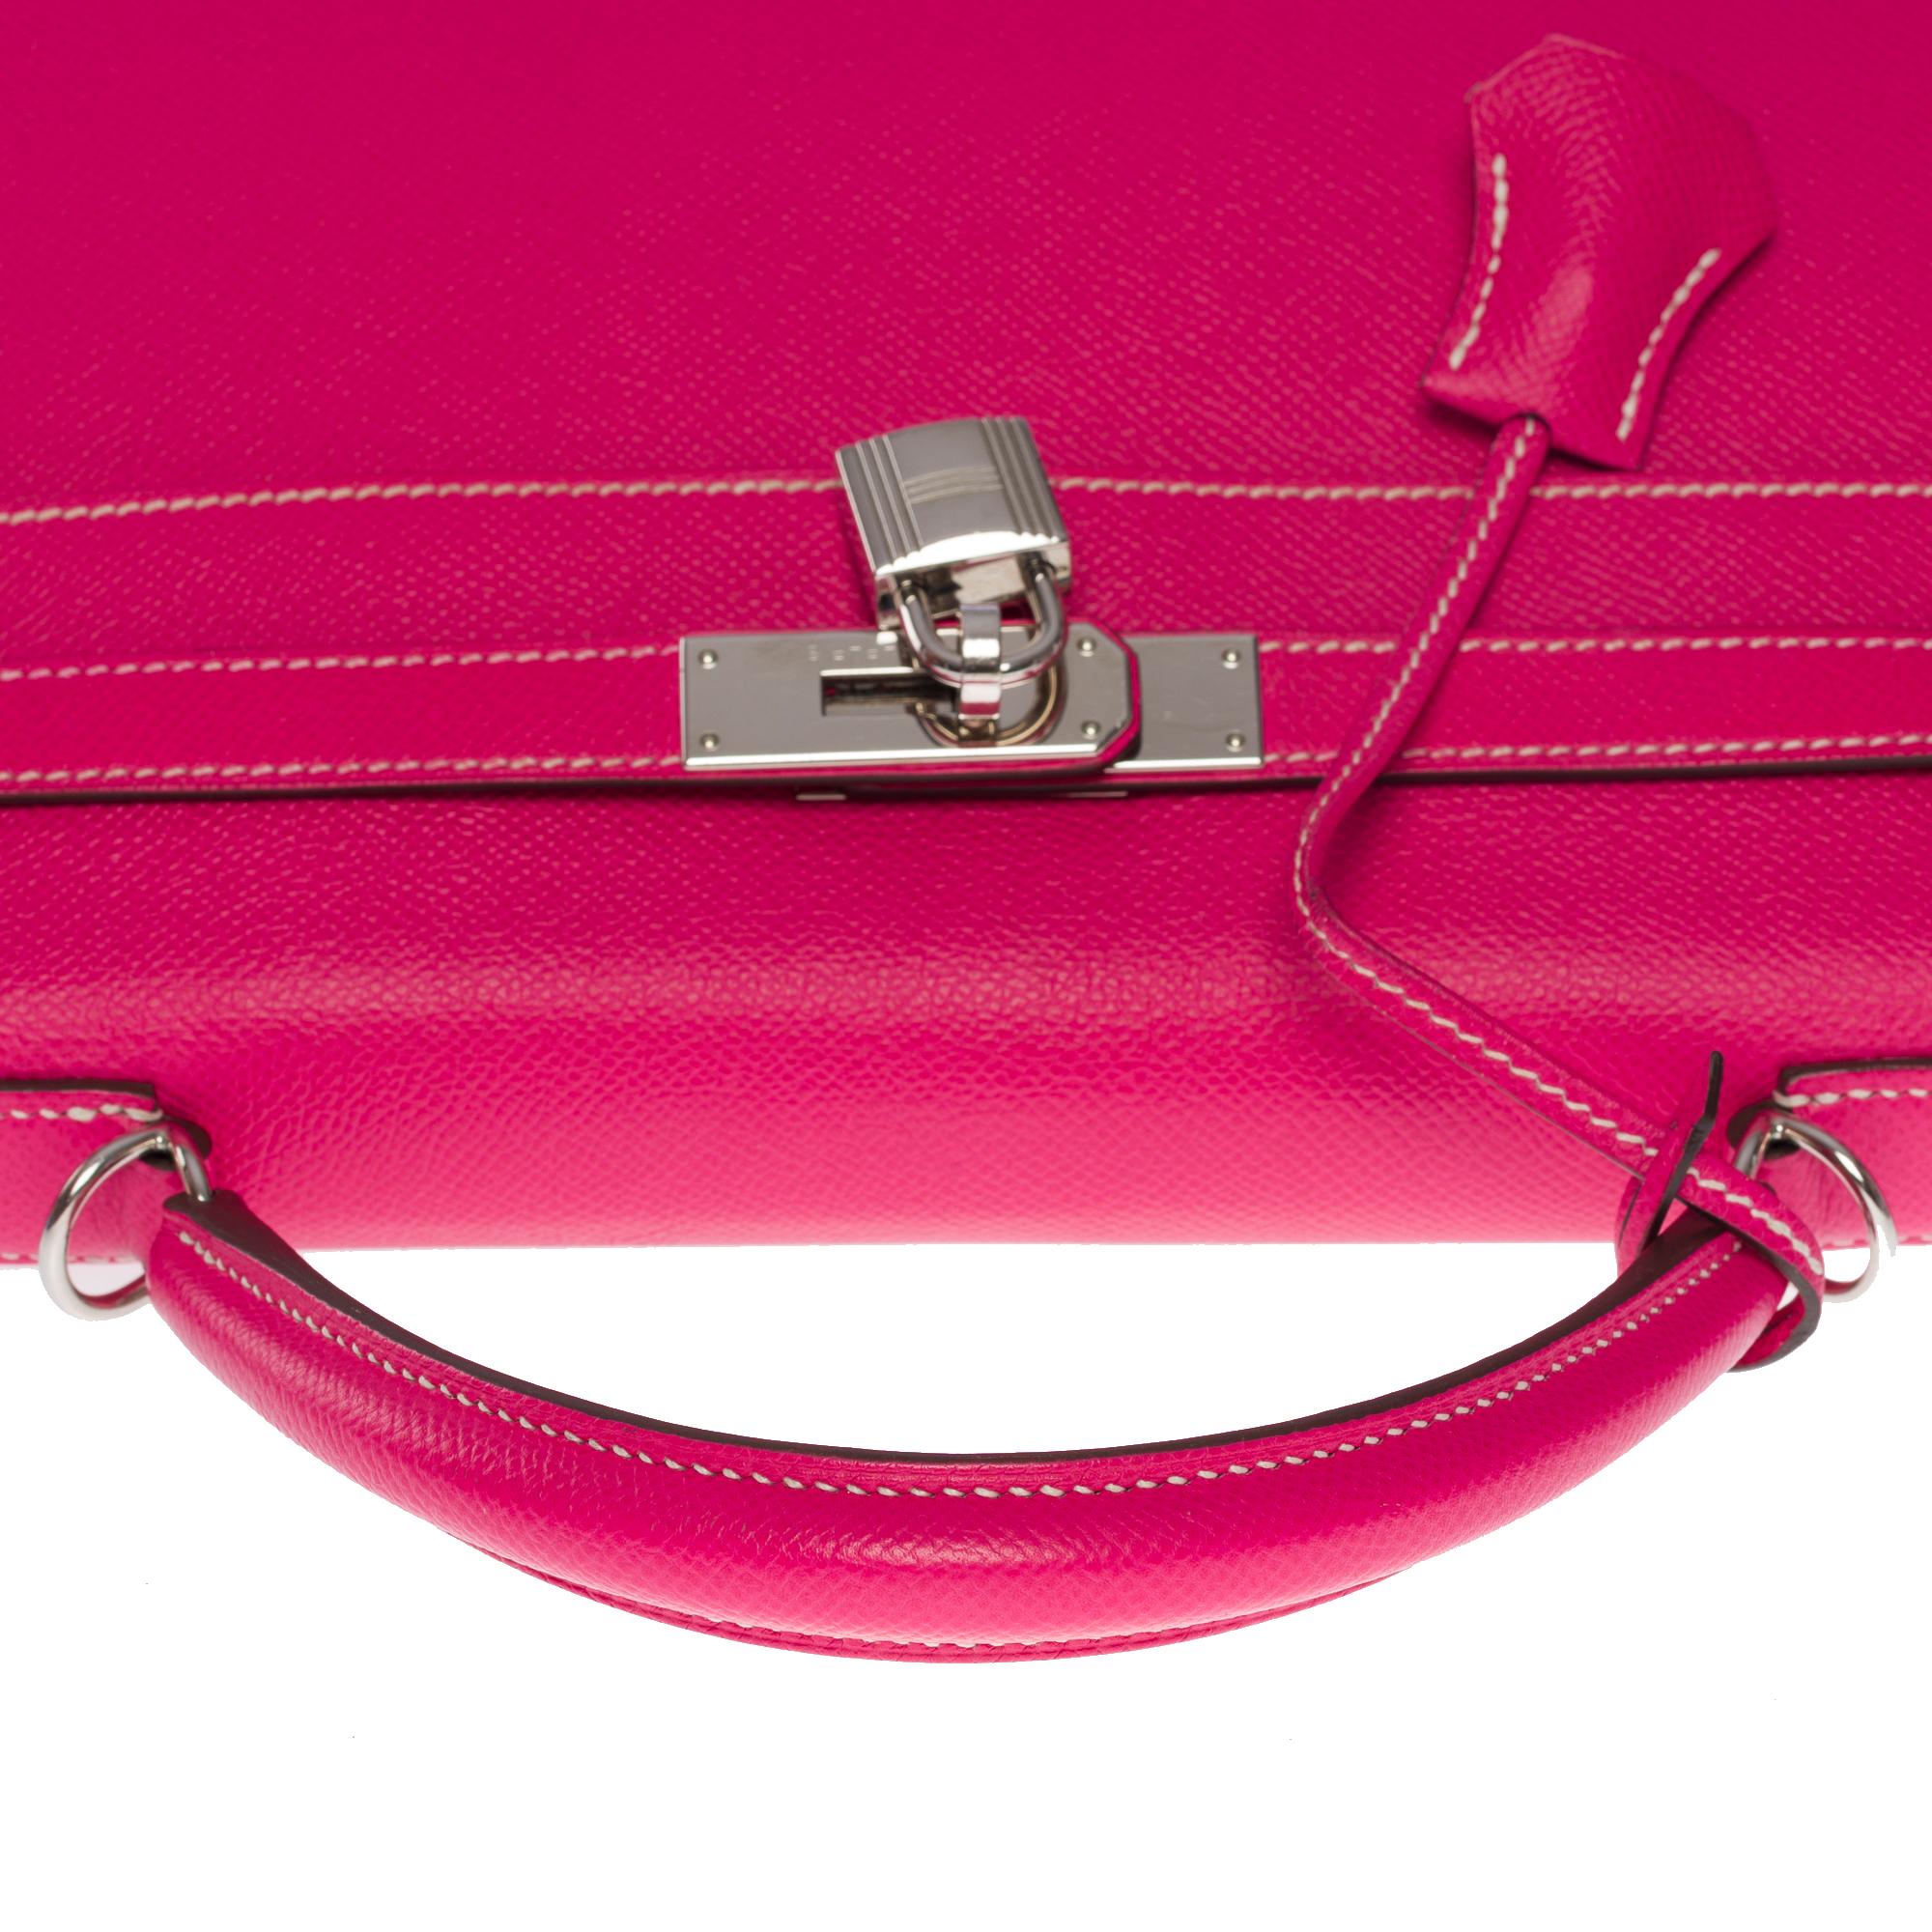 Hermès Kelly 32 sellier handbag strap (HSS) in Pink & purple Epsom leather, SHW 4